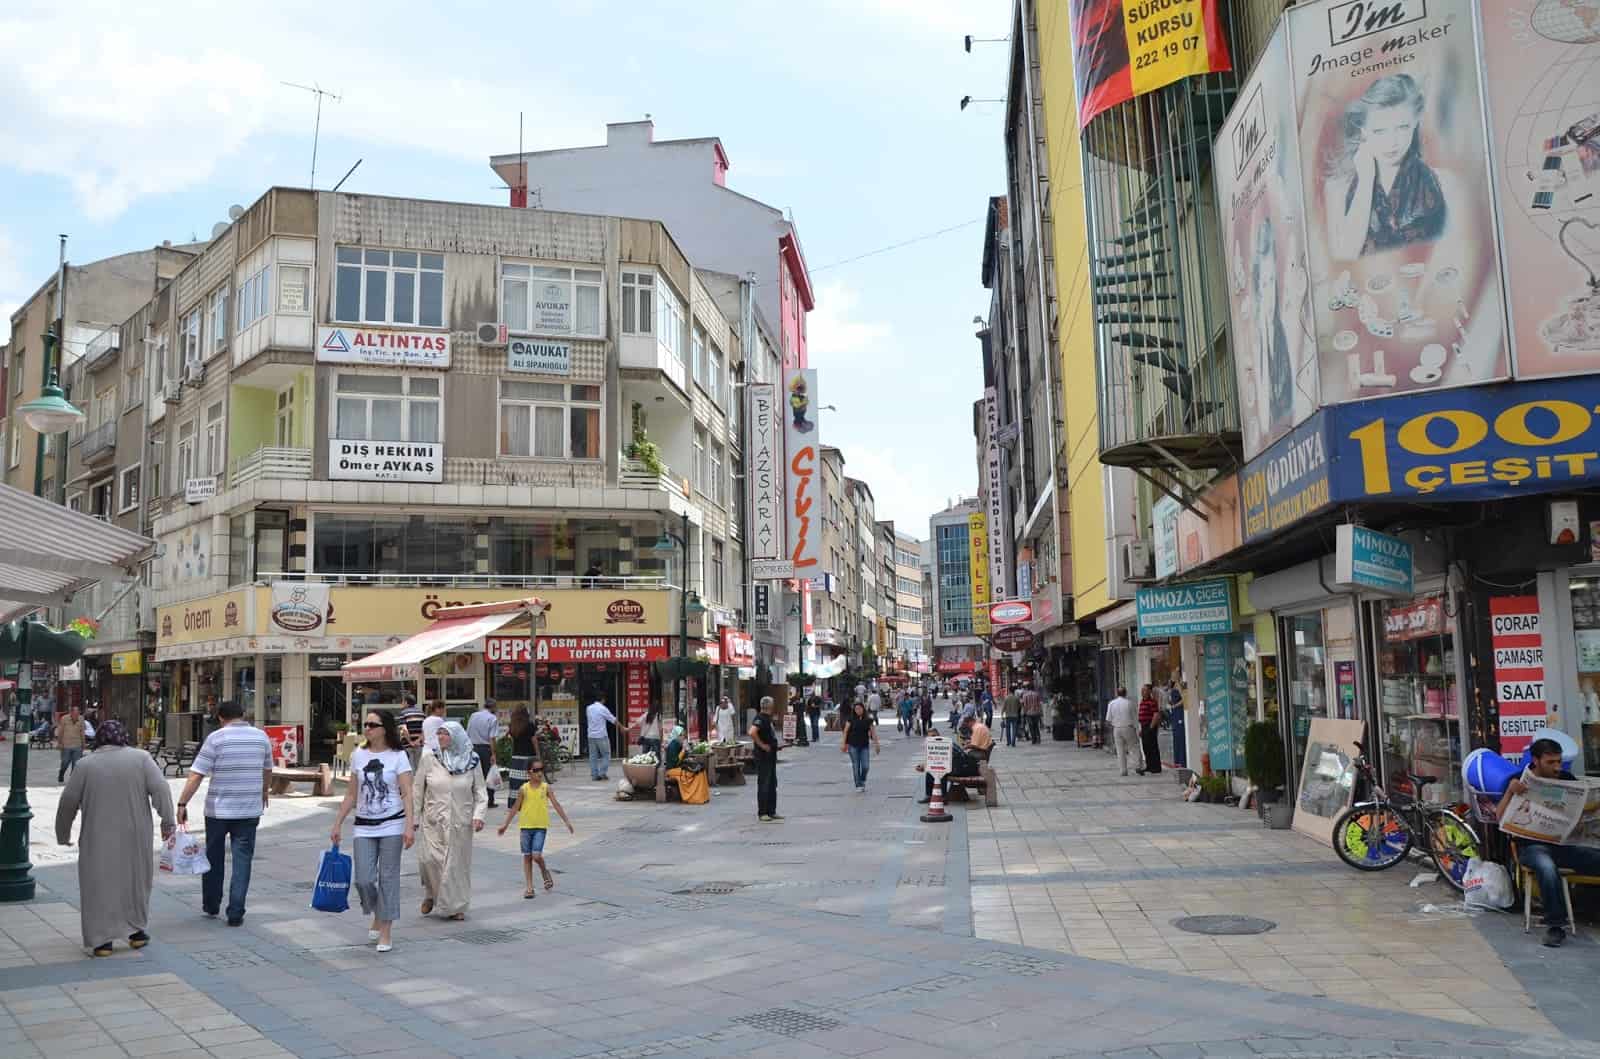 Kayseri, Turkey